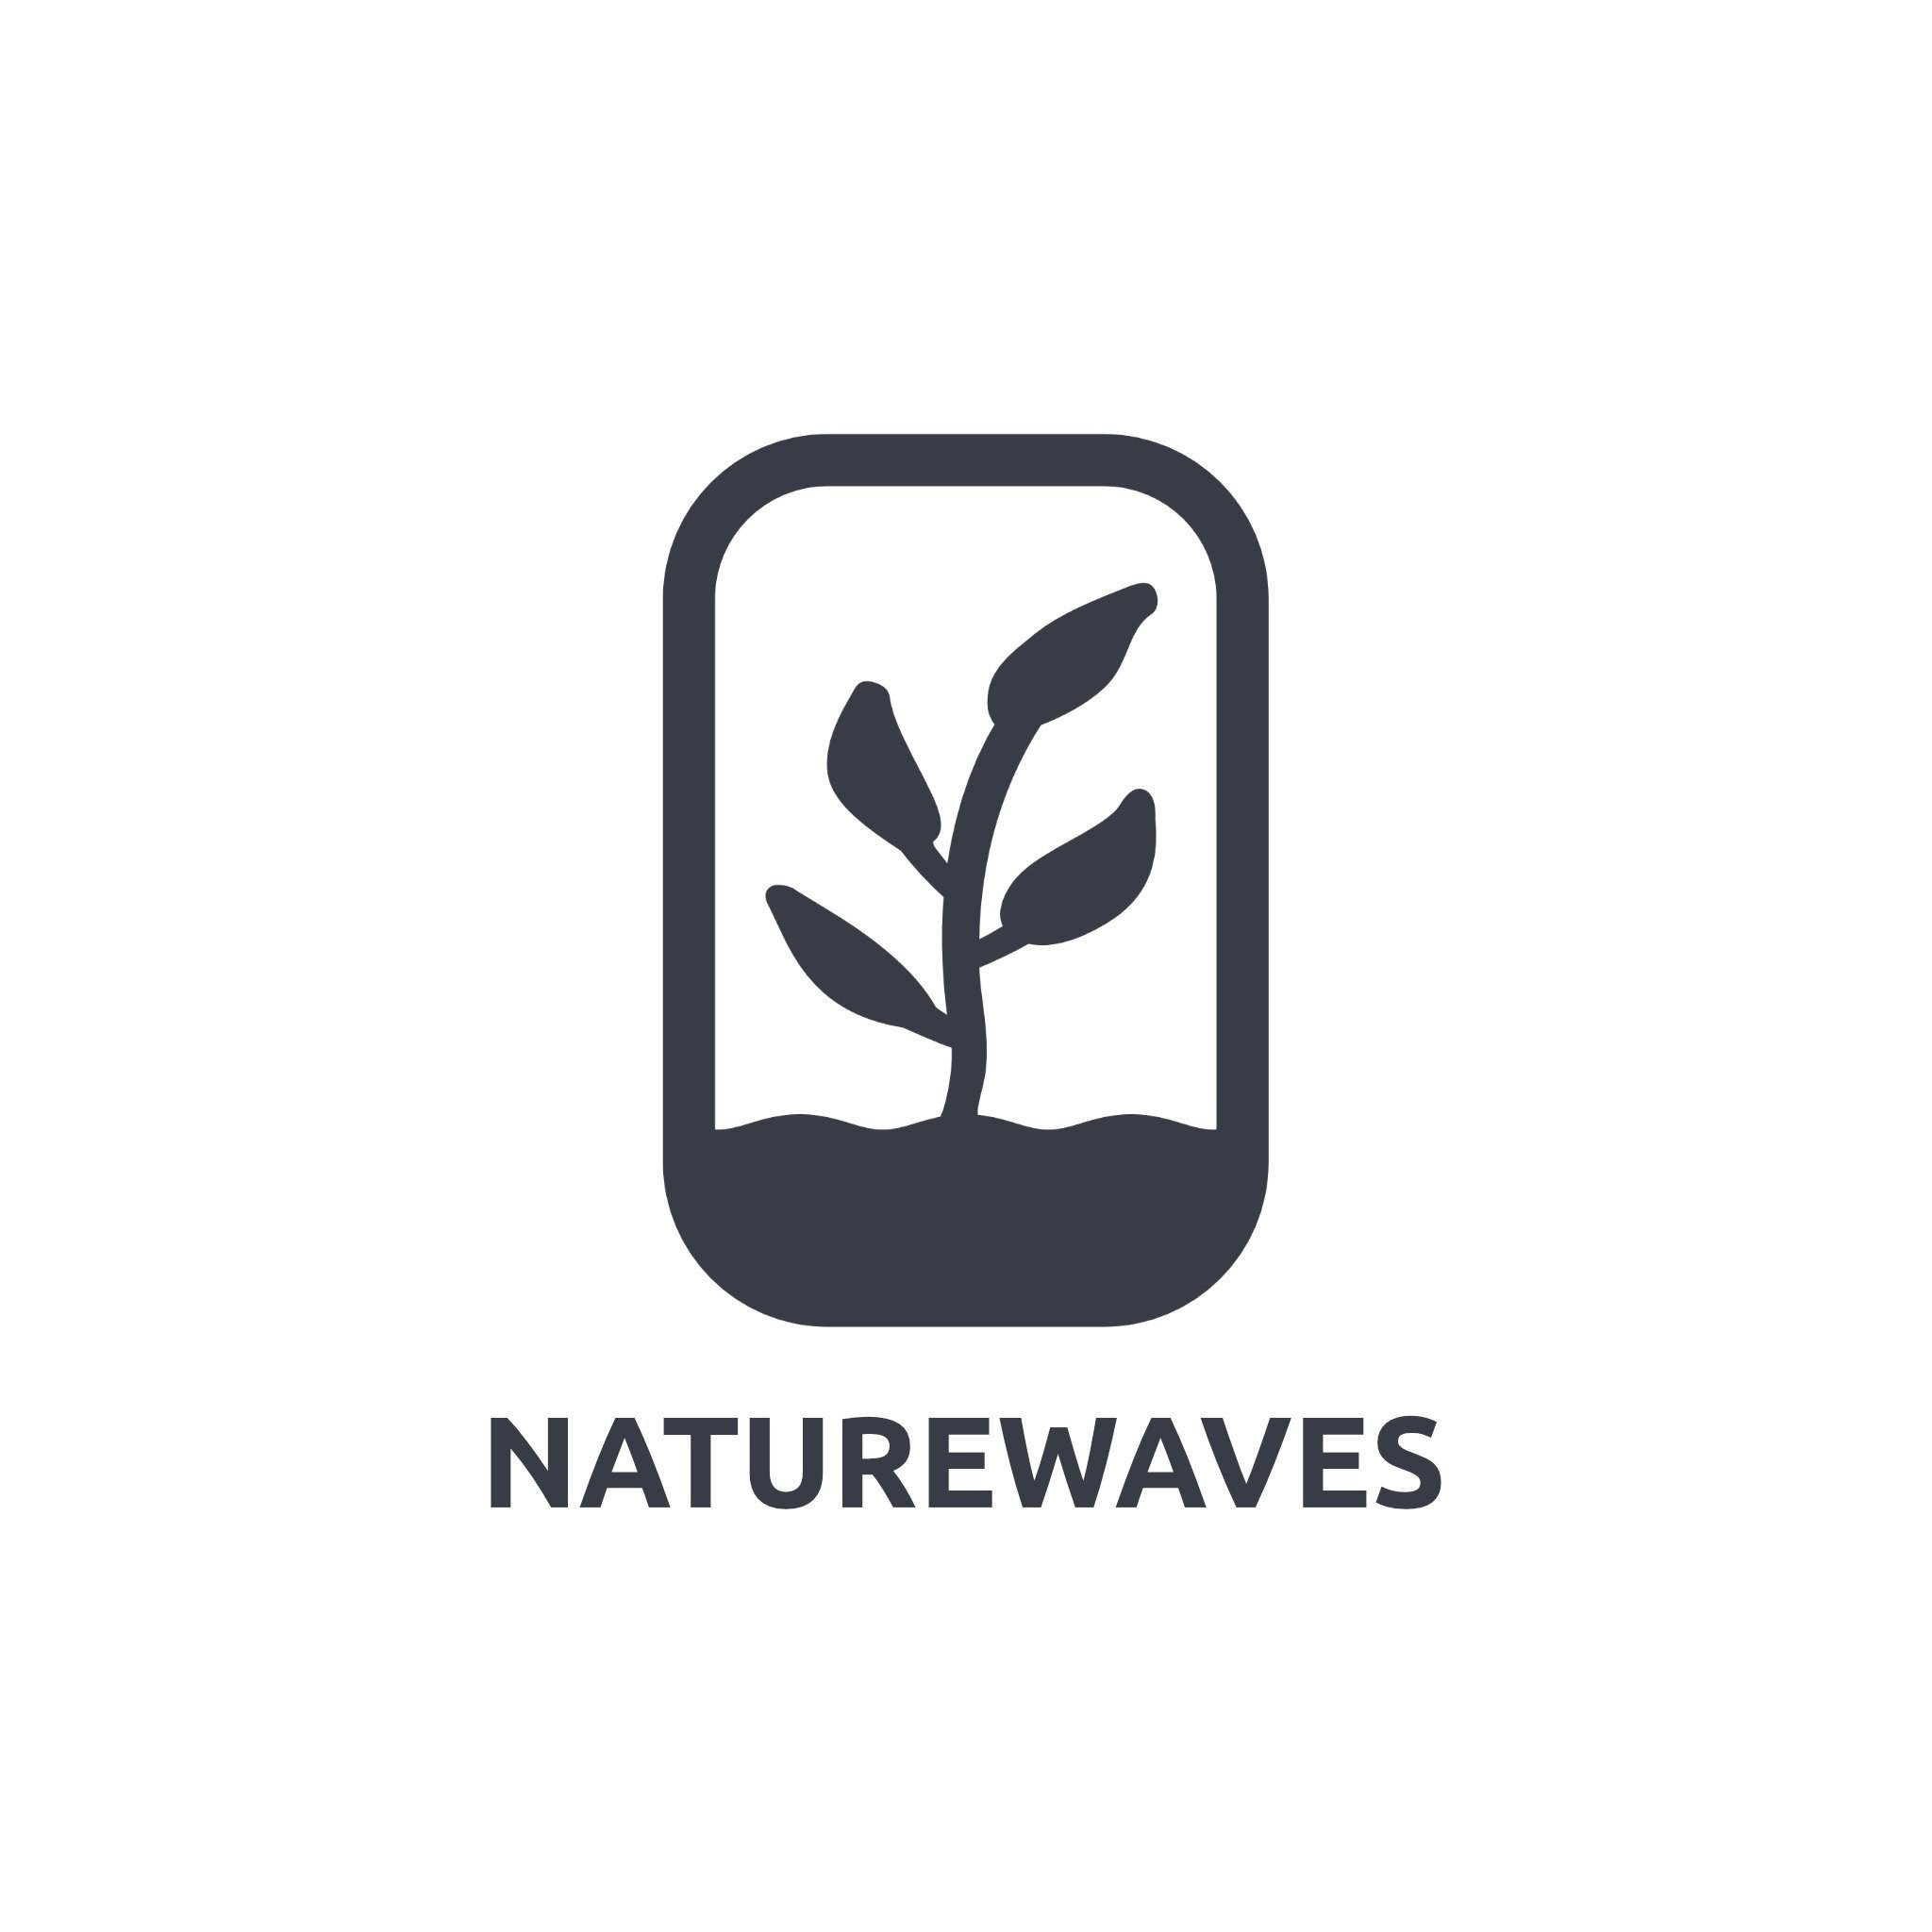 Naturewaves